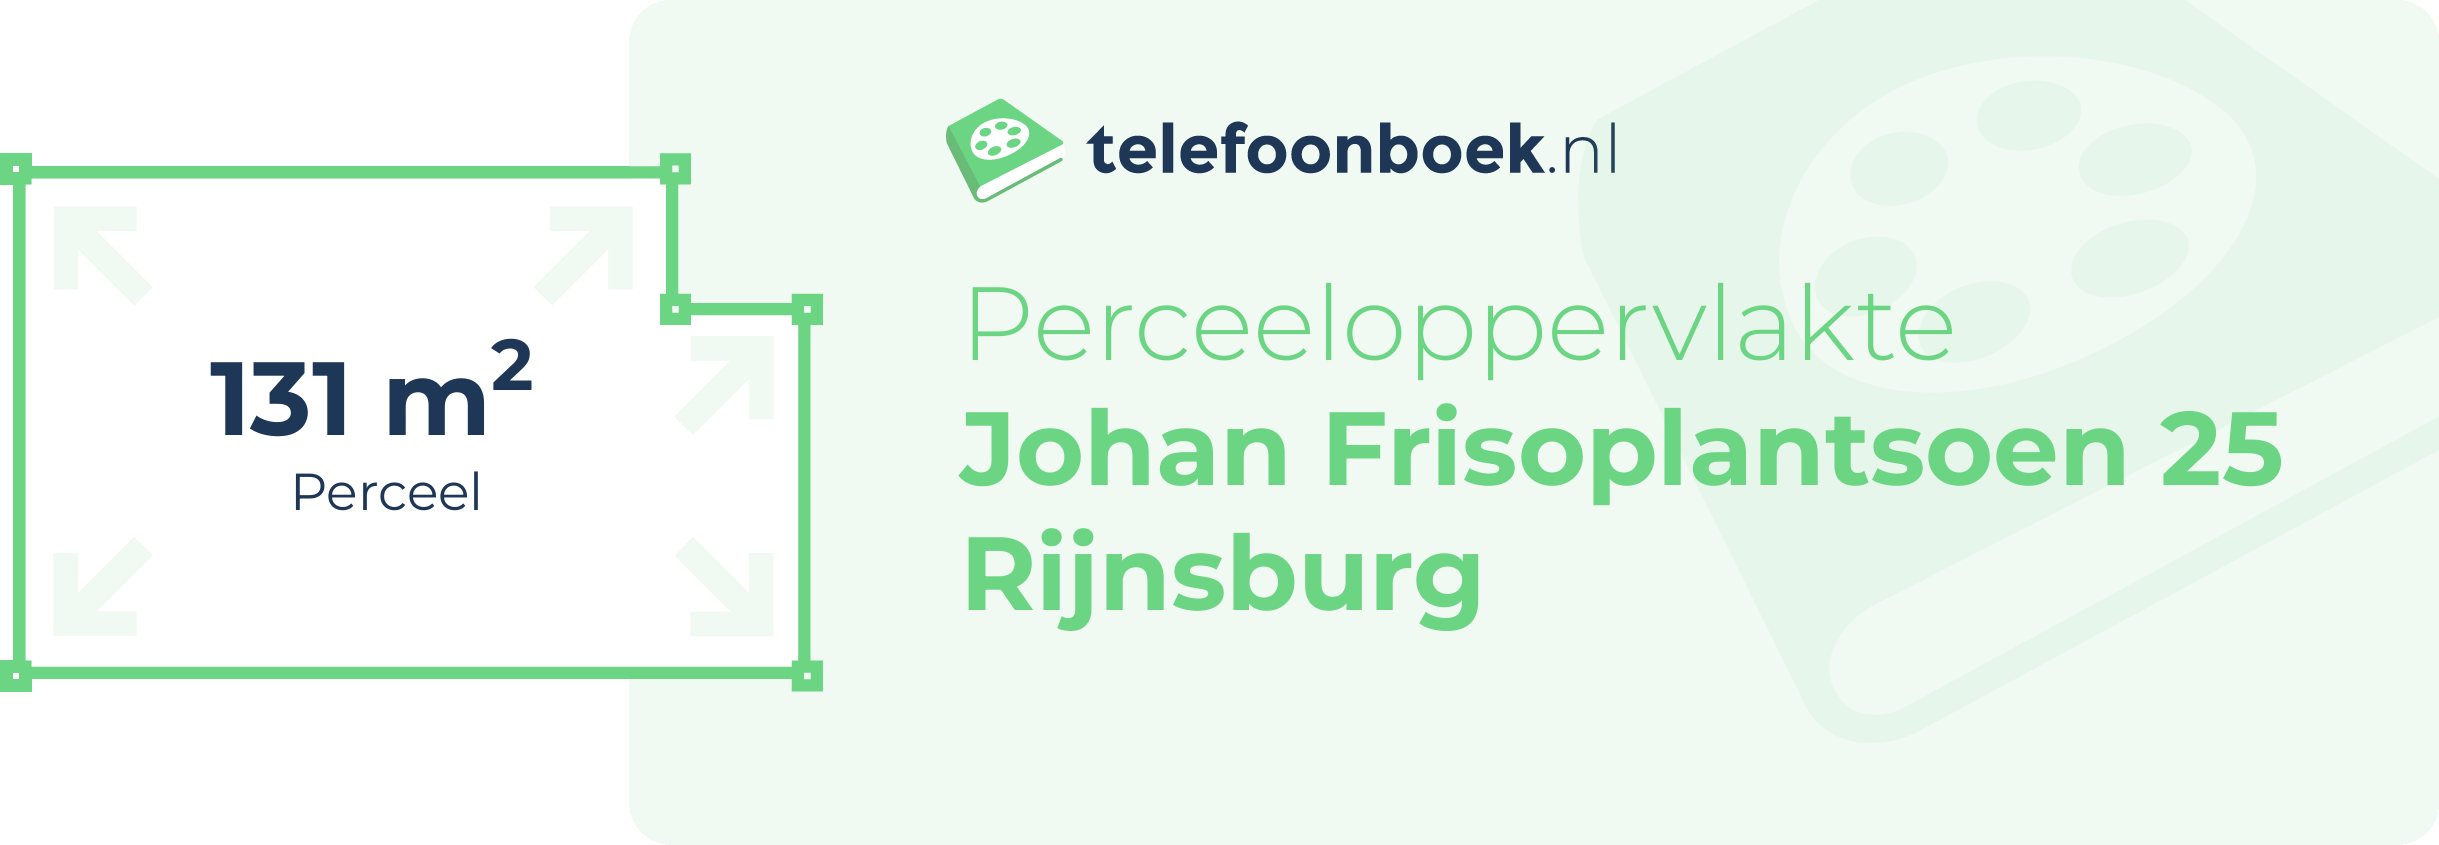 Perceeloppervlakte Johan Frisoplantsoen 25 Rijnsburg